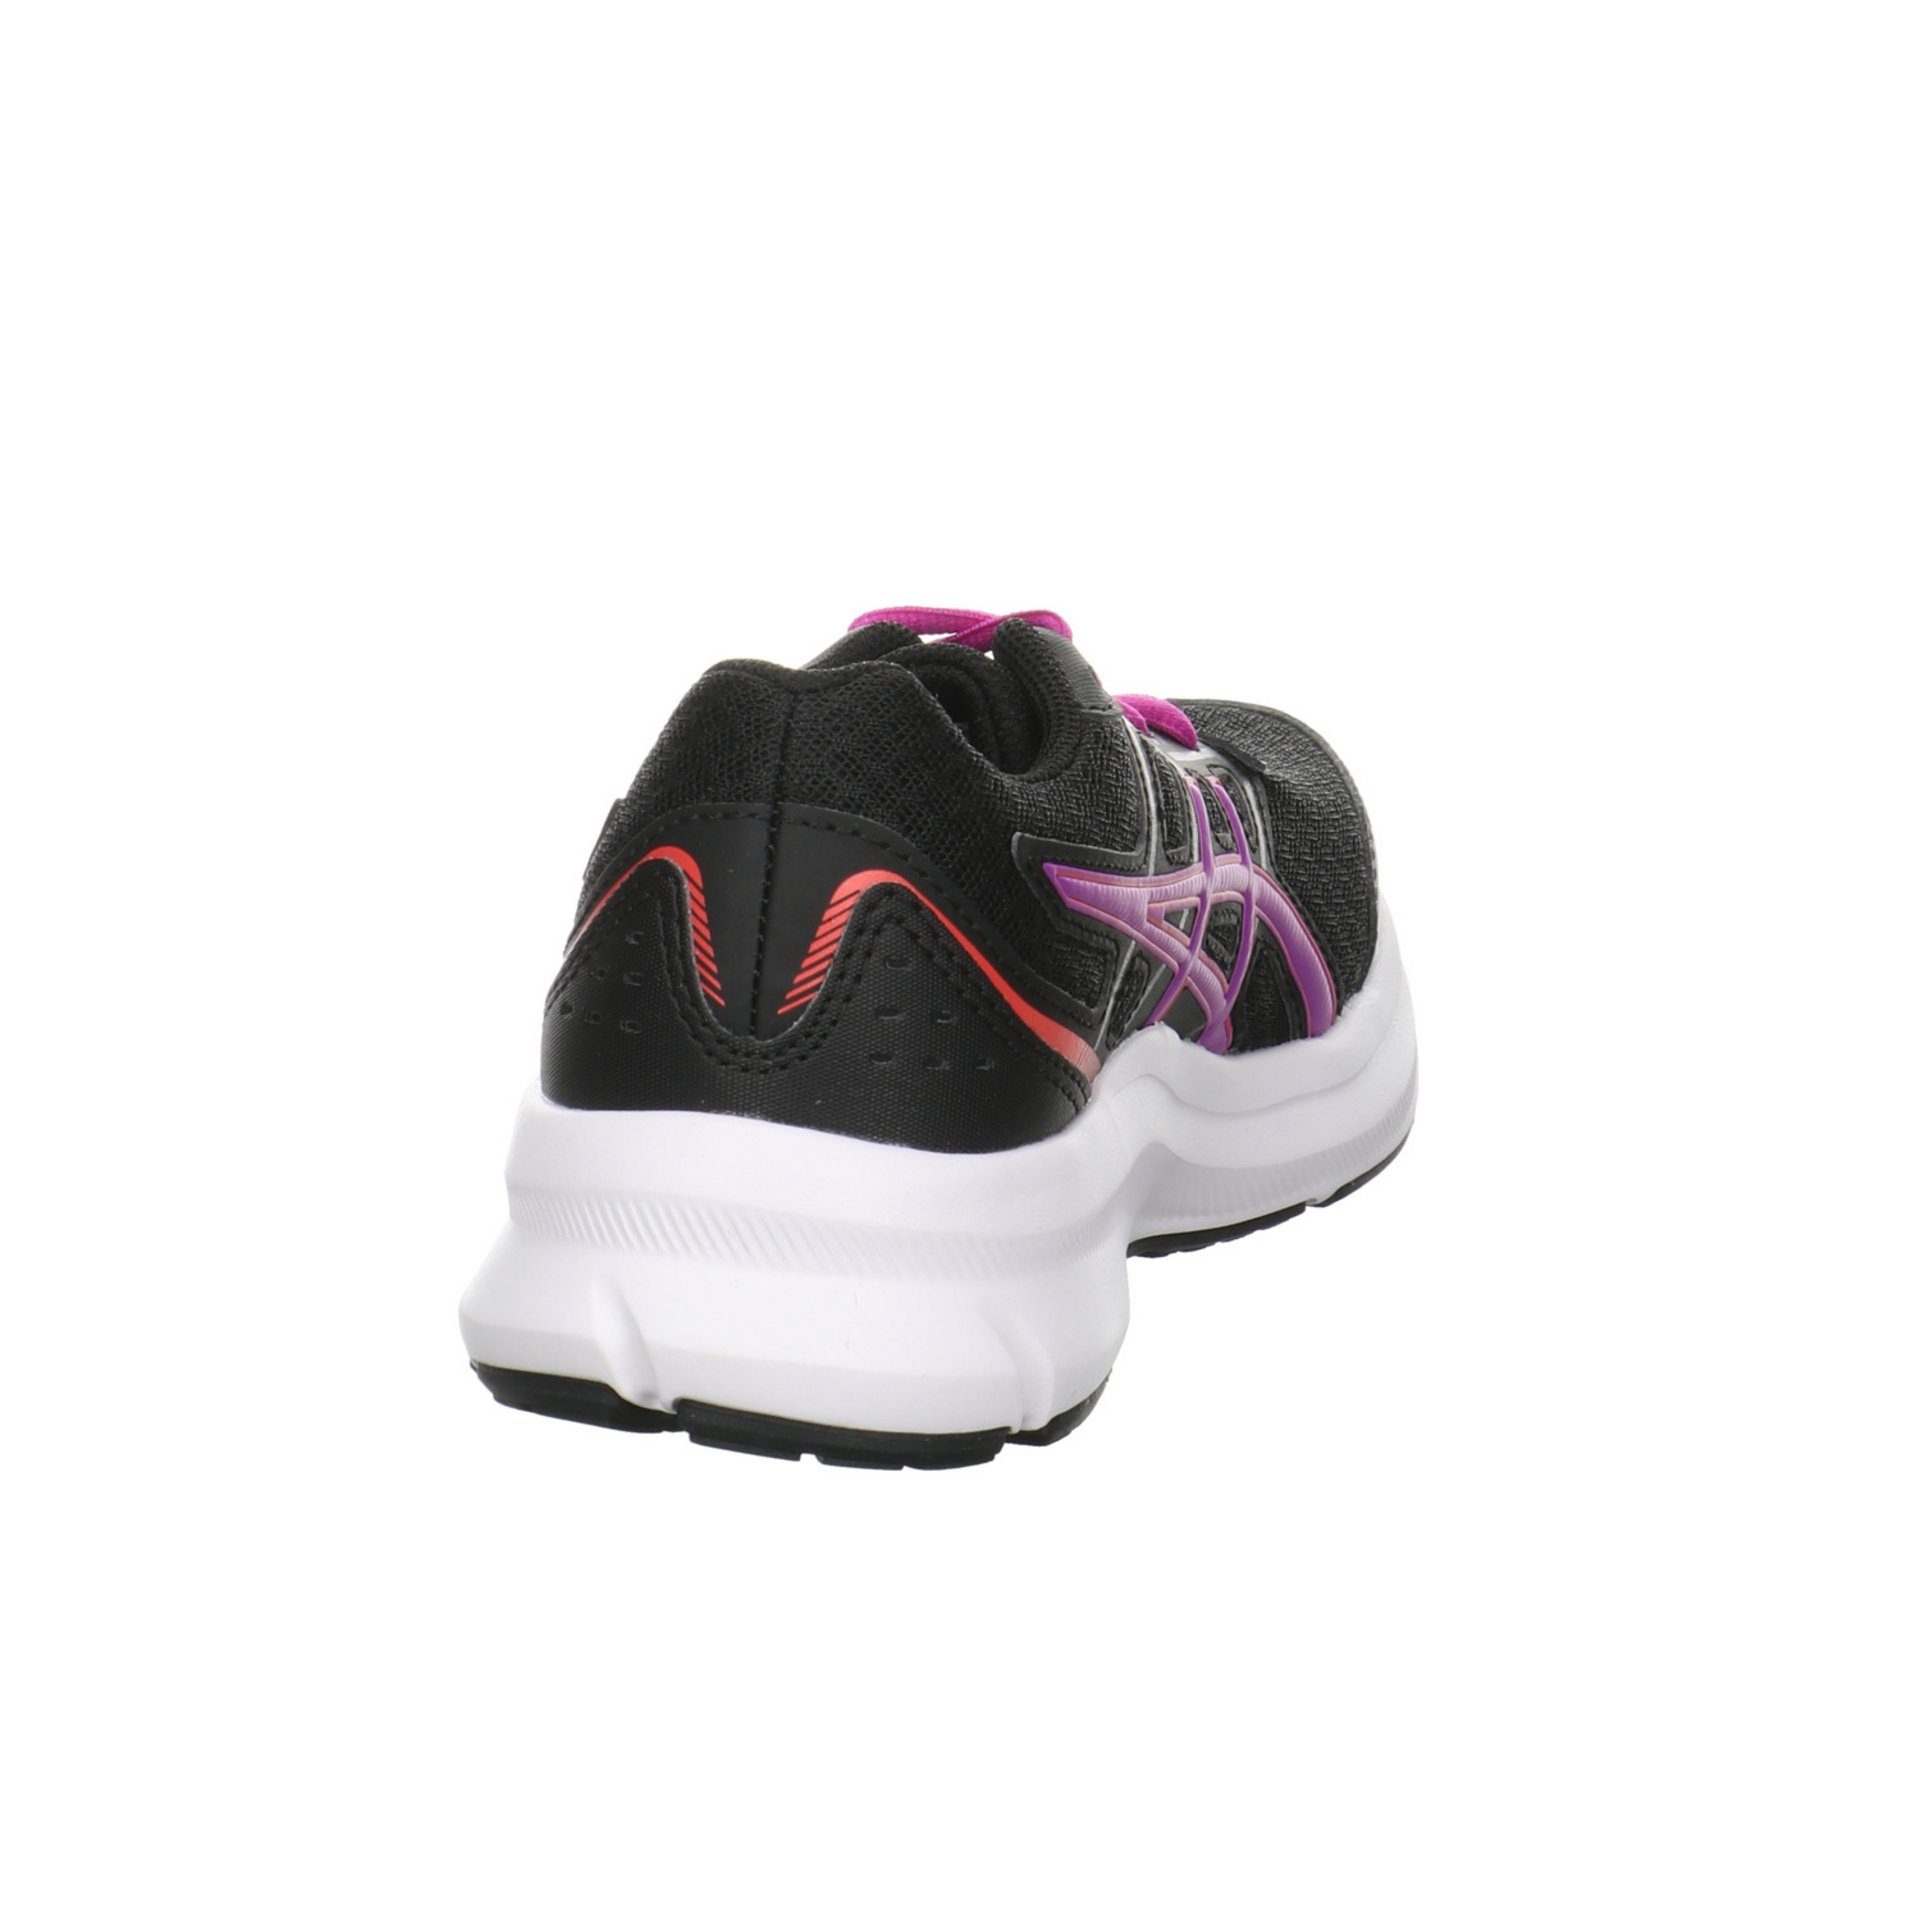 Jolt Synthetikkombination Sneaker 3 Asics Schuhe Pink Sneaker GS Black Jungen Sneaker